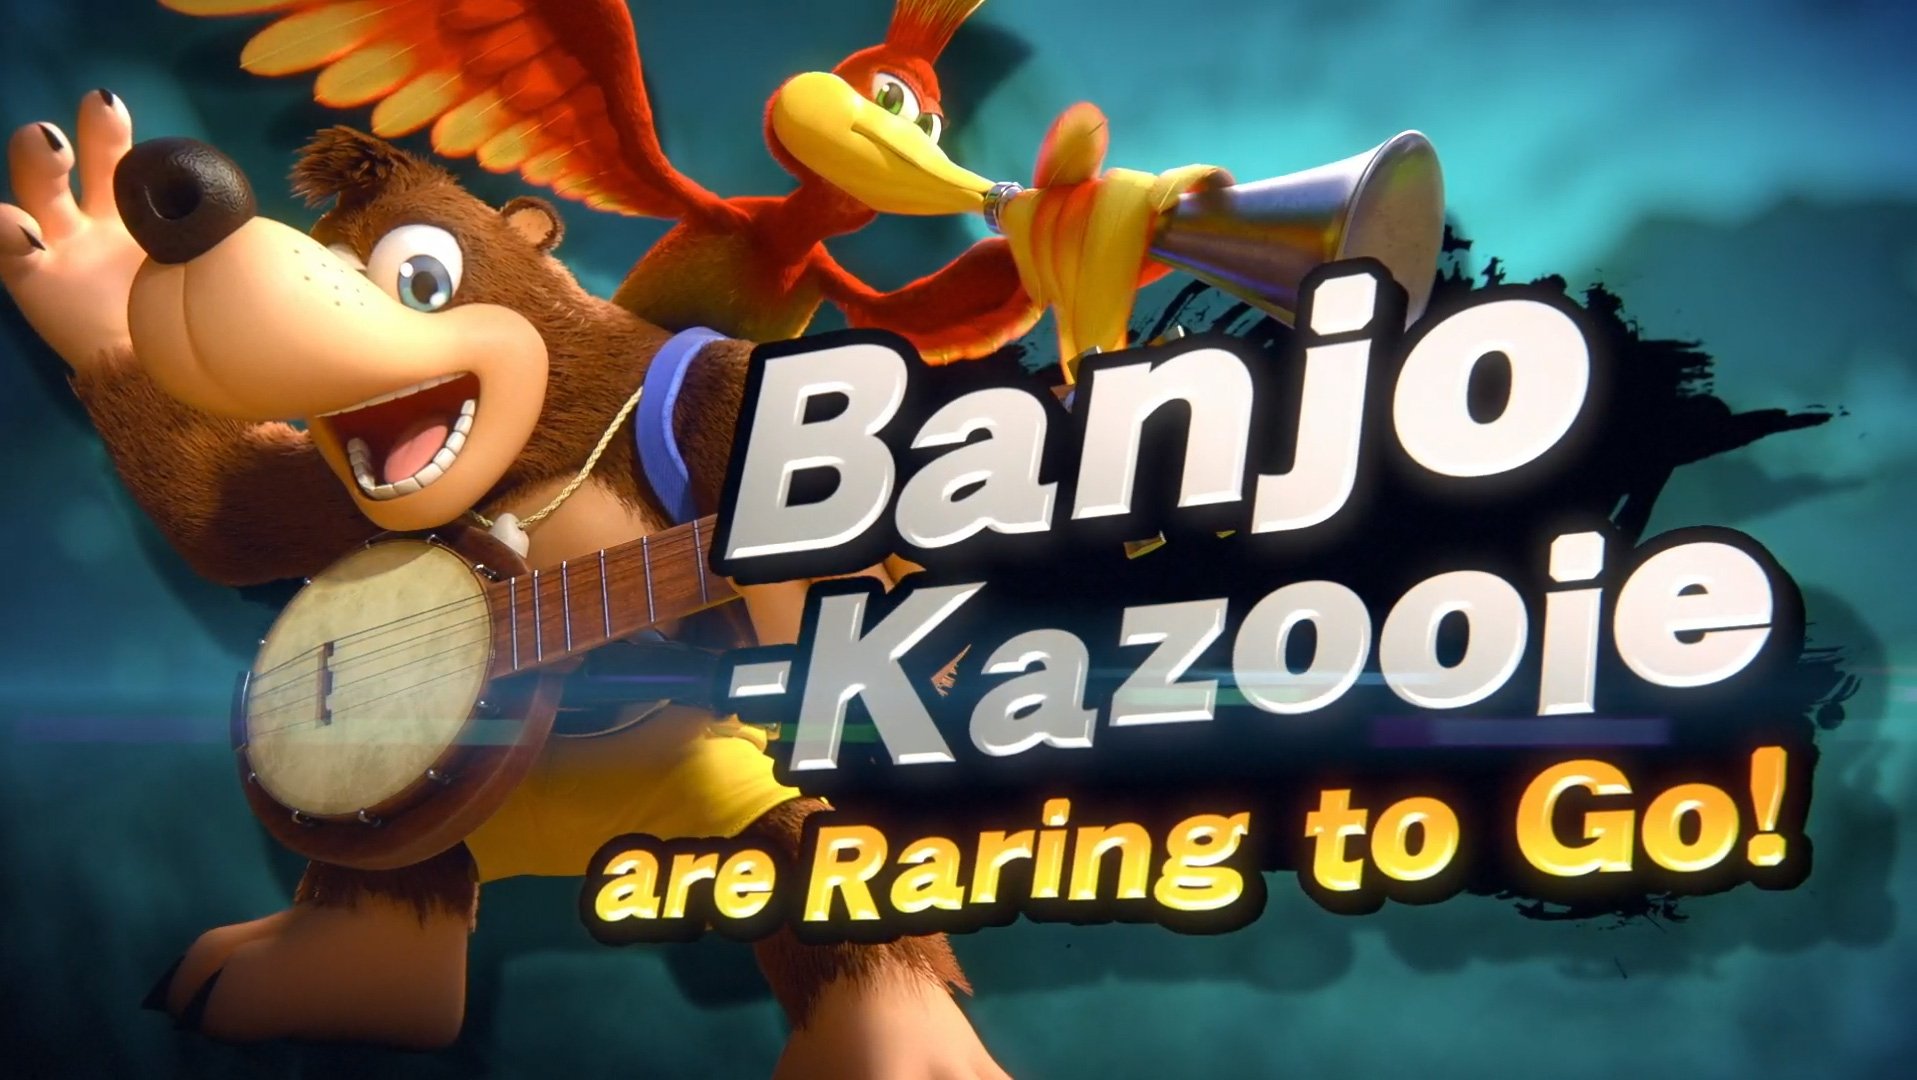 Banjo from Banjo-Kazooie